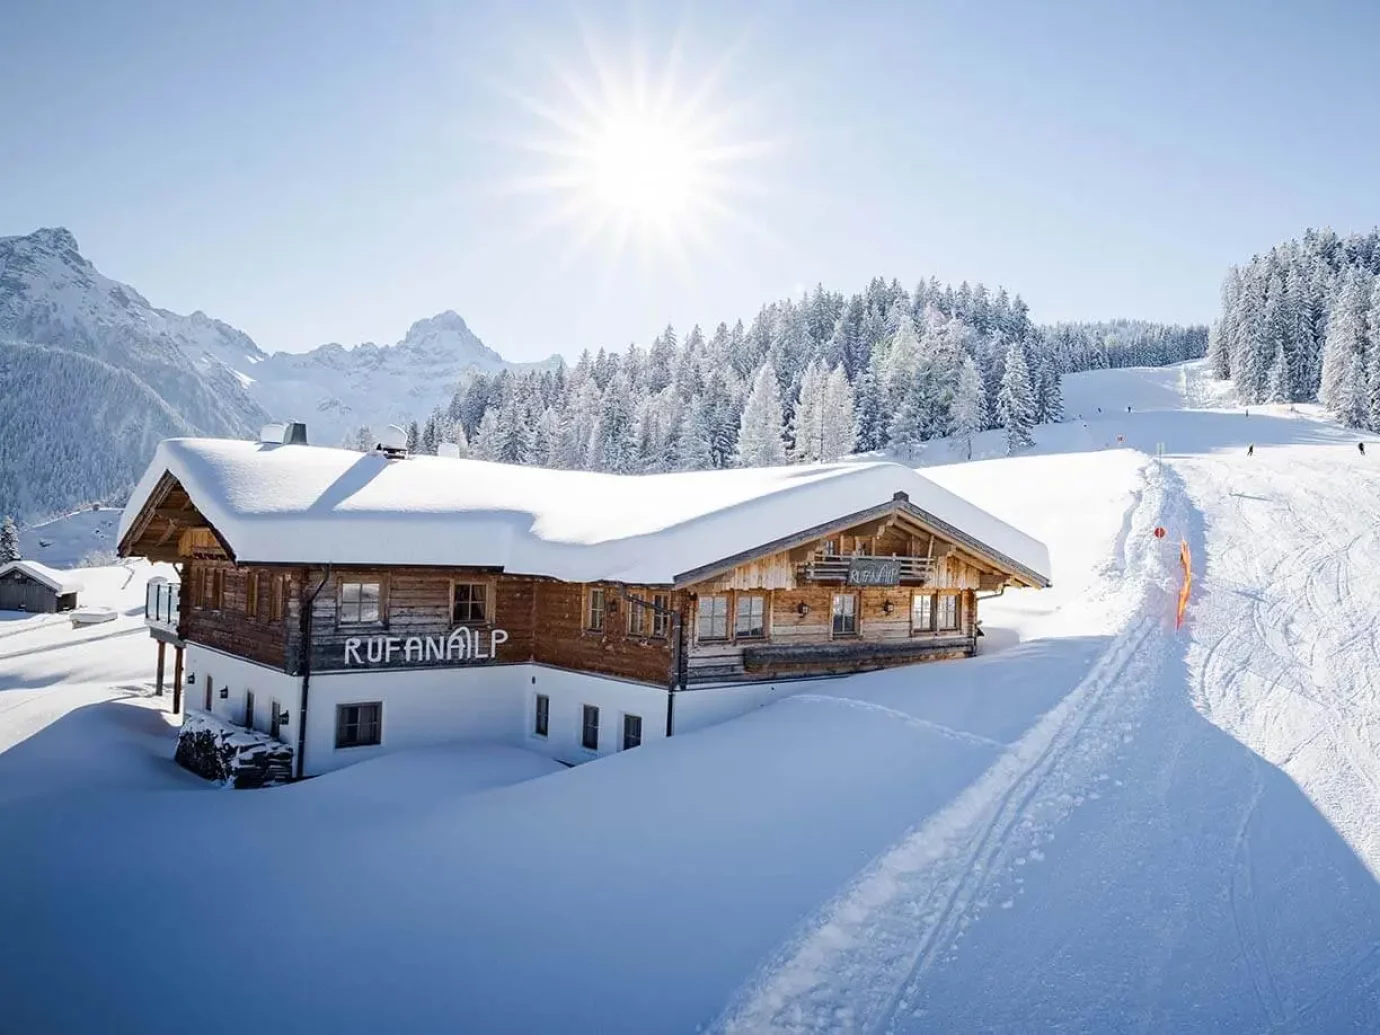 Rufana Alp Skigebiet Brandnertal